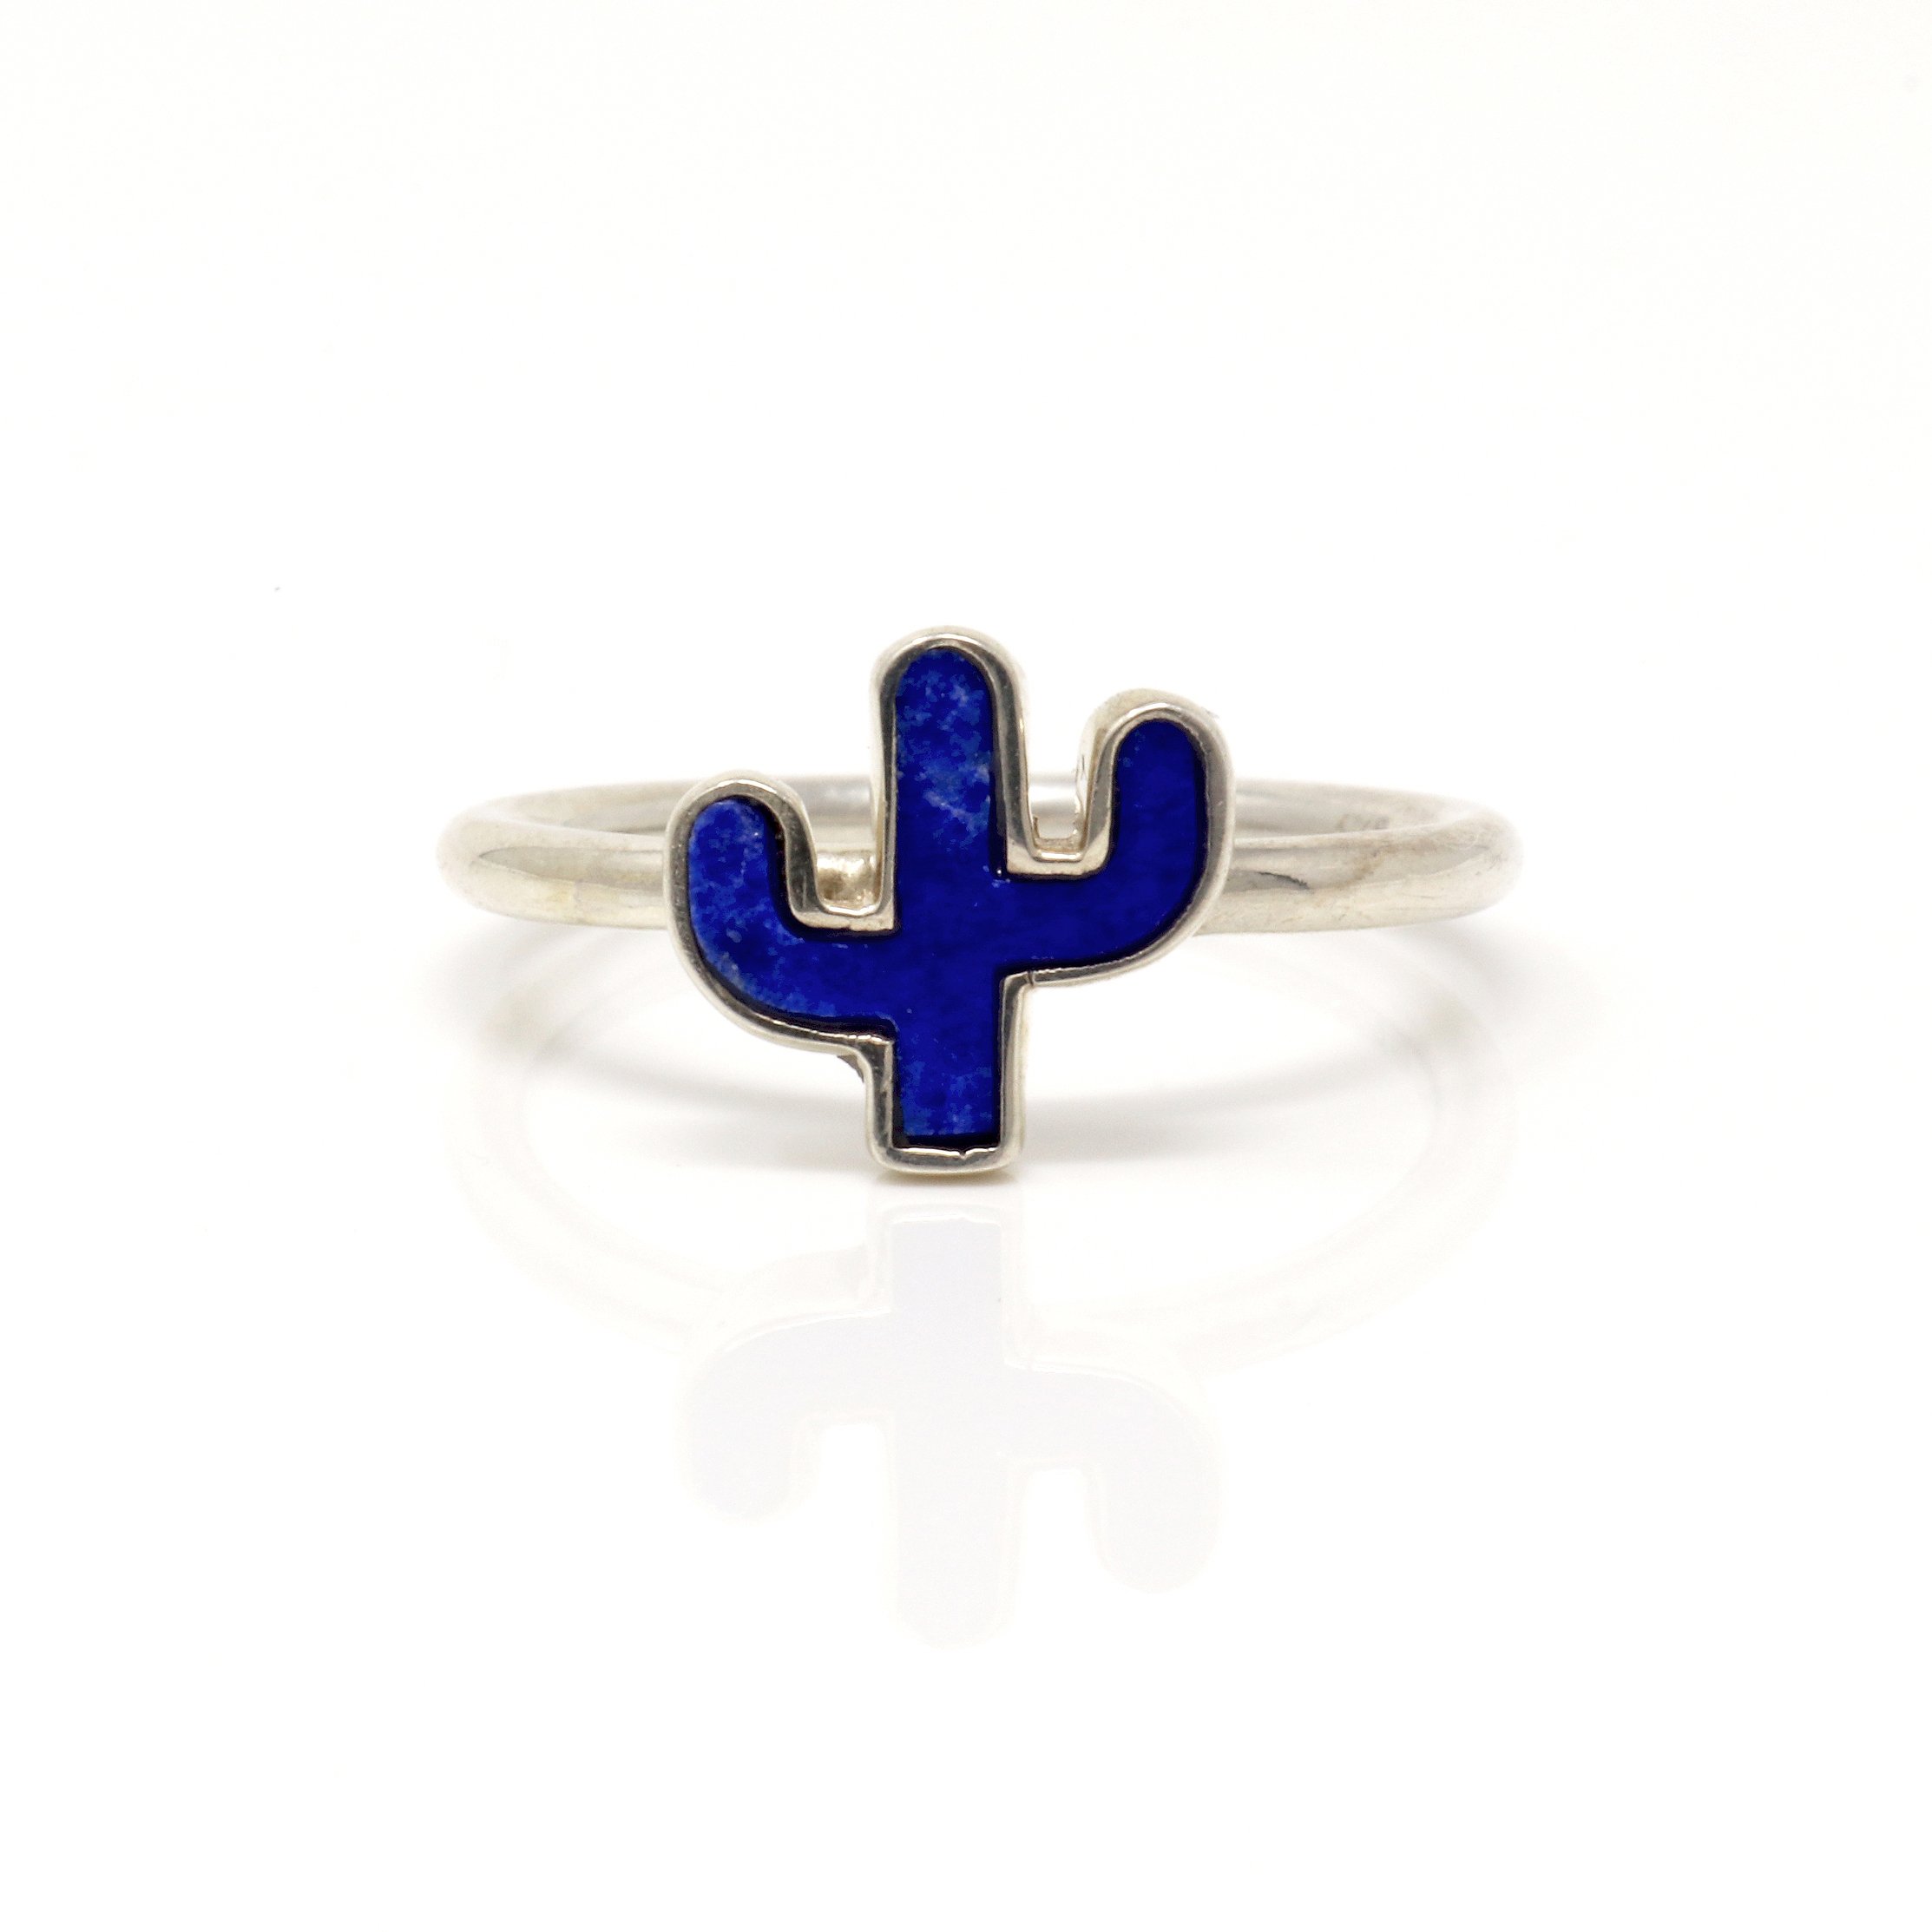 Lapis Lazuli Size 9 Cactus Ring With Silver Bezel